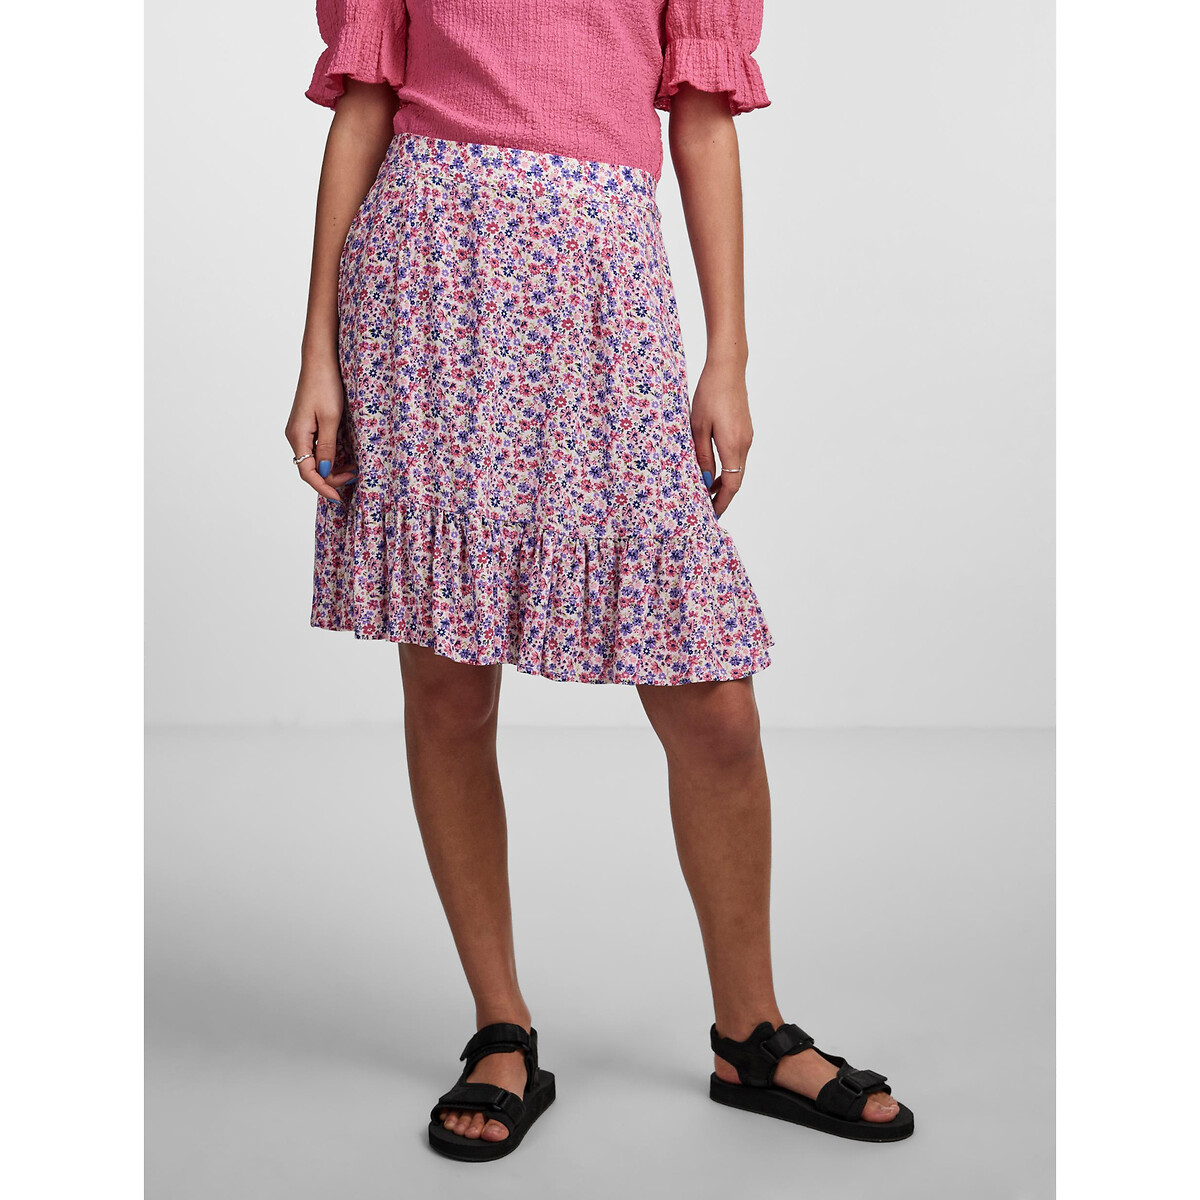 Printed Mini Skirt with High Waist